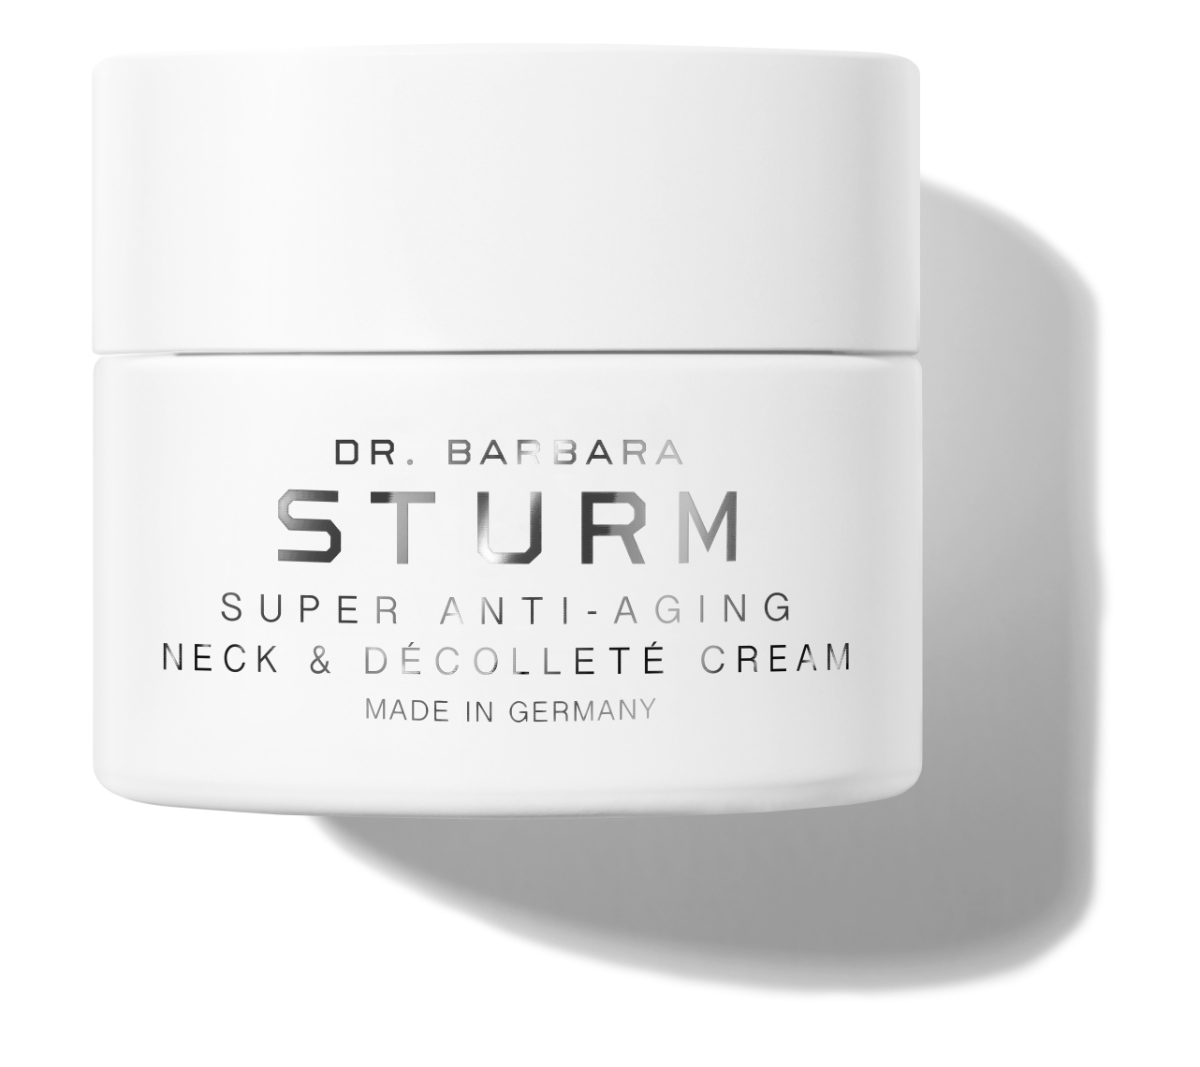 Dr. Barbara Sturm’s Introduces New Super Anti-aging Neck & Décolleté Cream